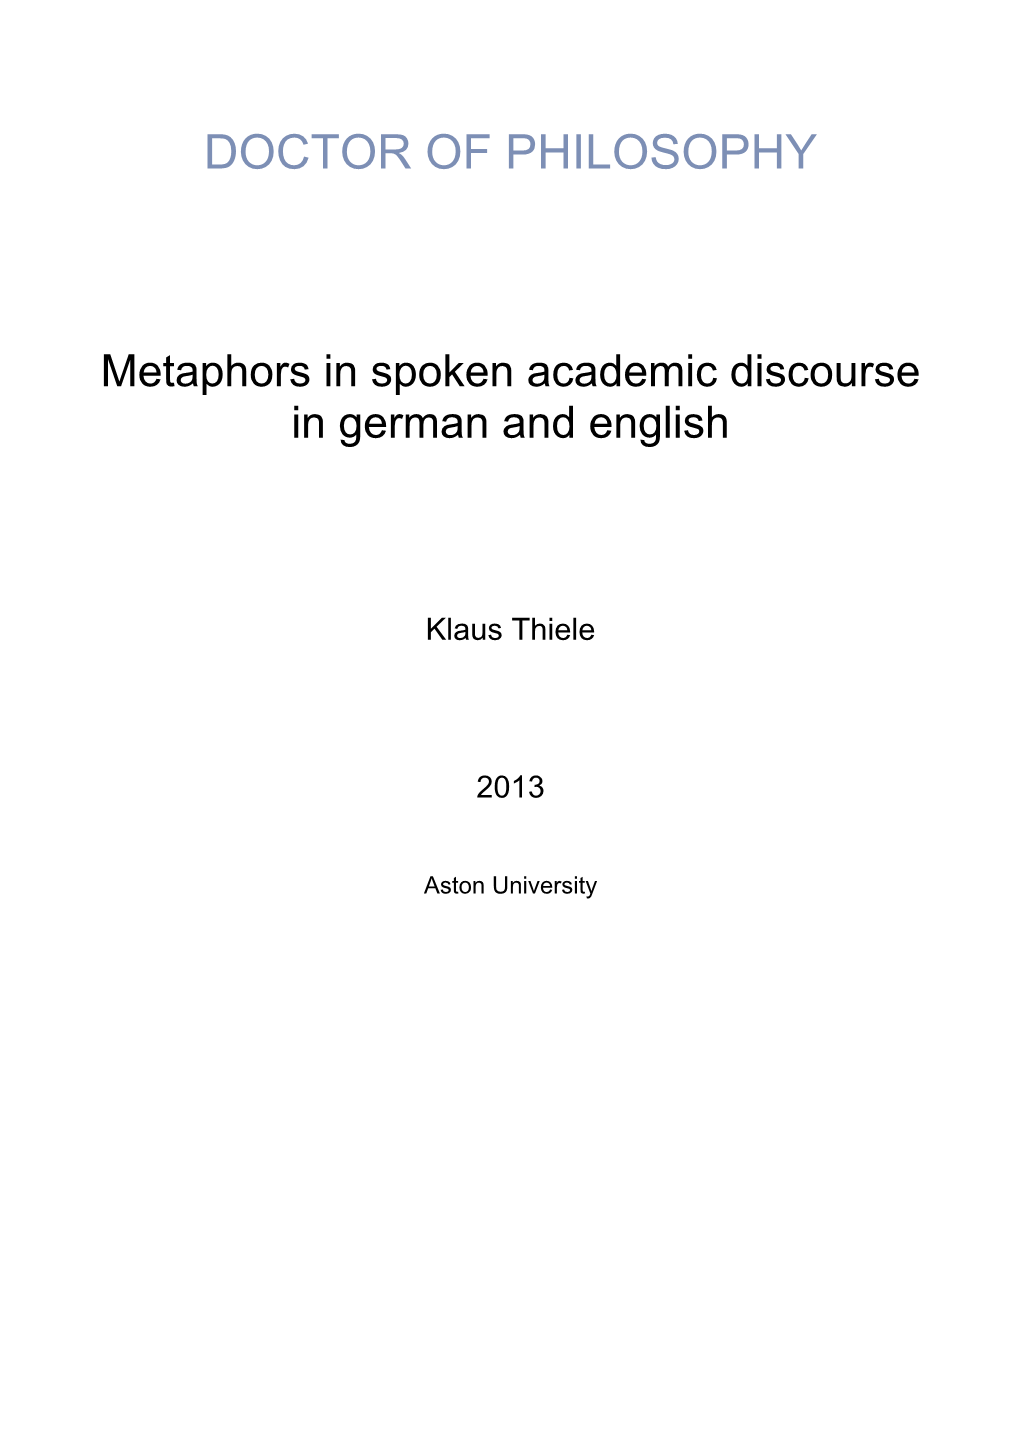 Metaphors in Spoken Academic Discourse in German and English